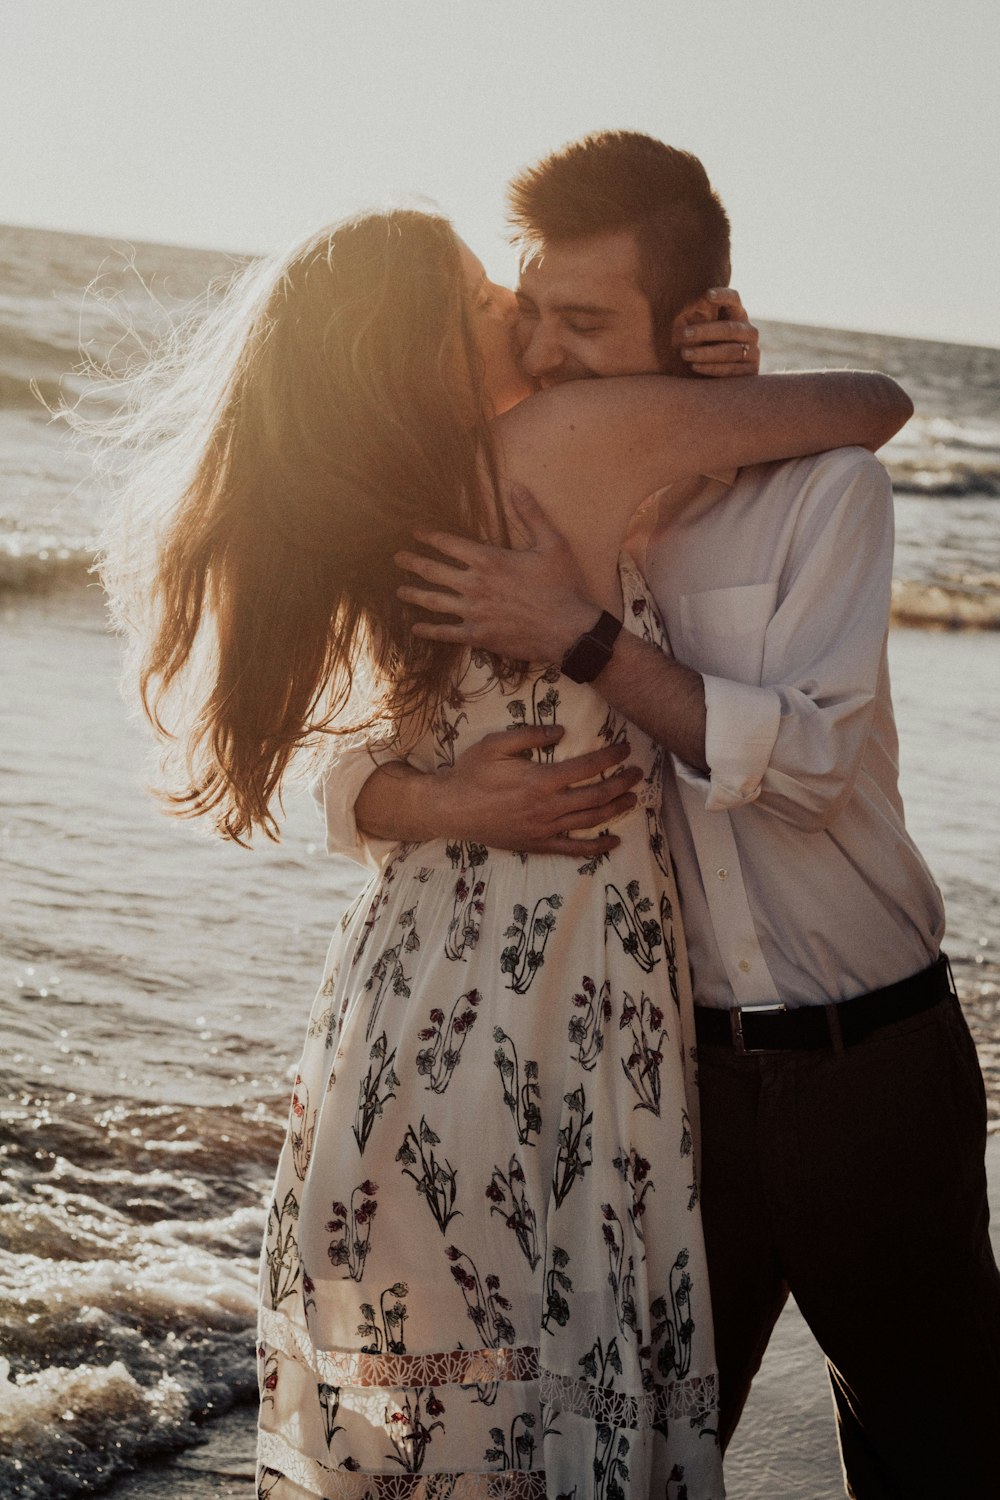 woman hugging and kissing man on cheek on seashore during daytime